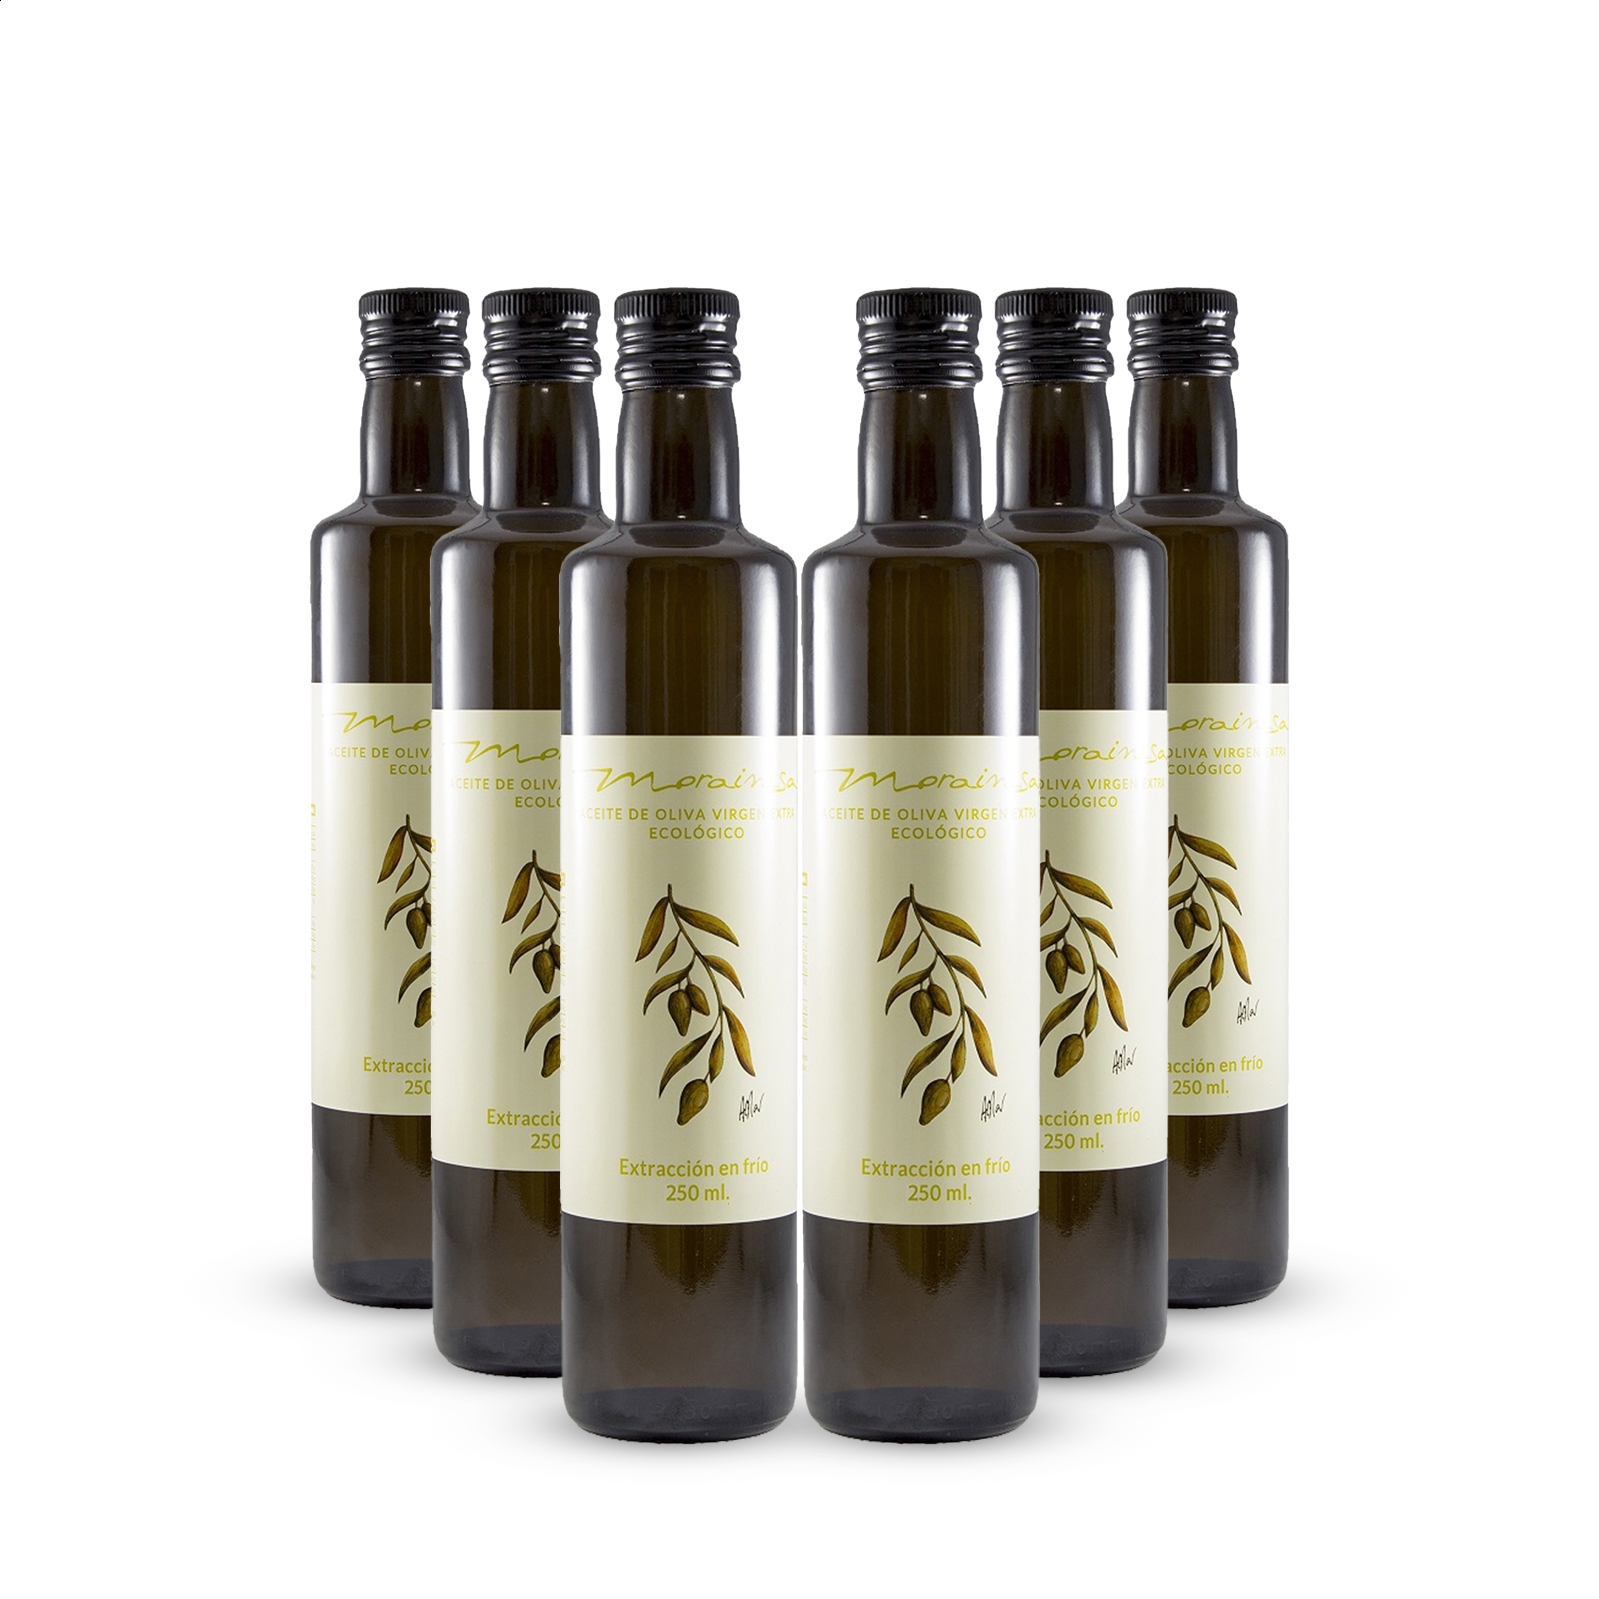 Morainsa - Aceite de oliva extra virgen ecológico 250ml, 6uds